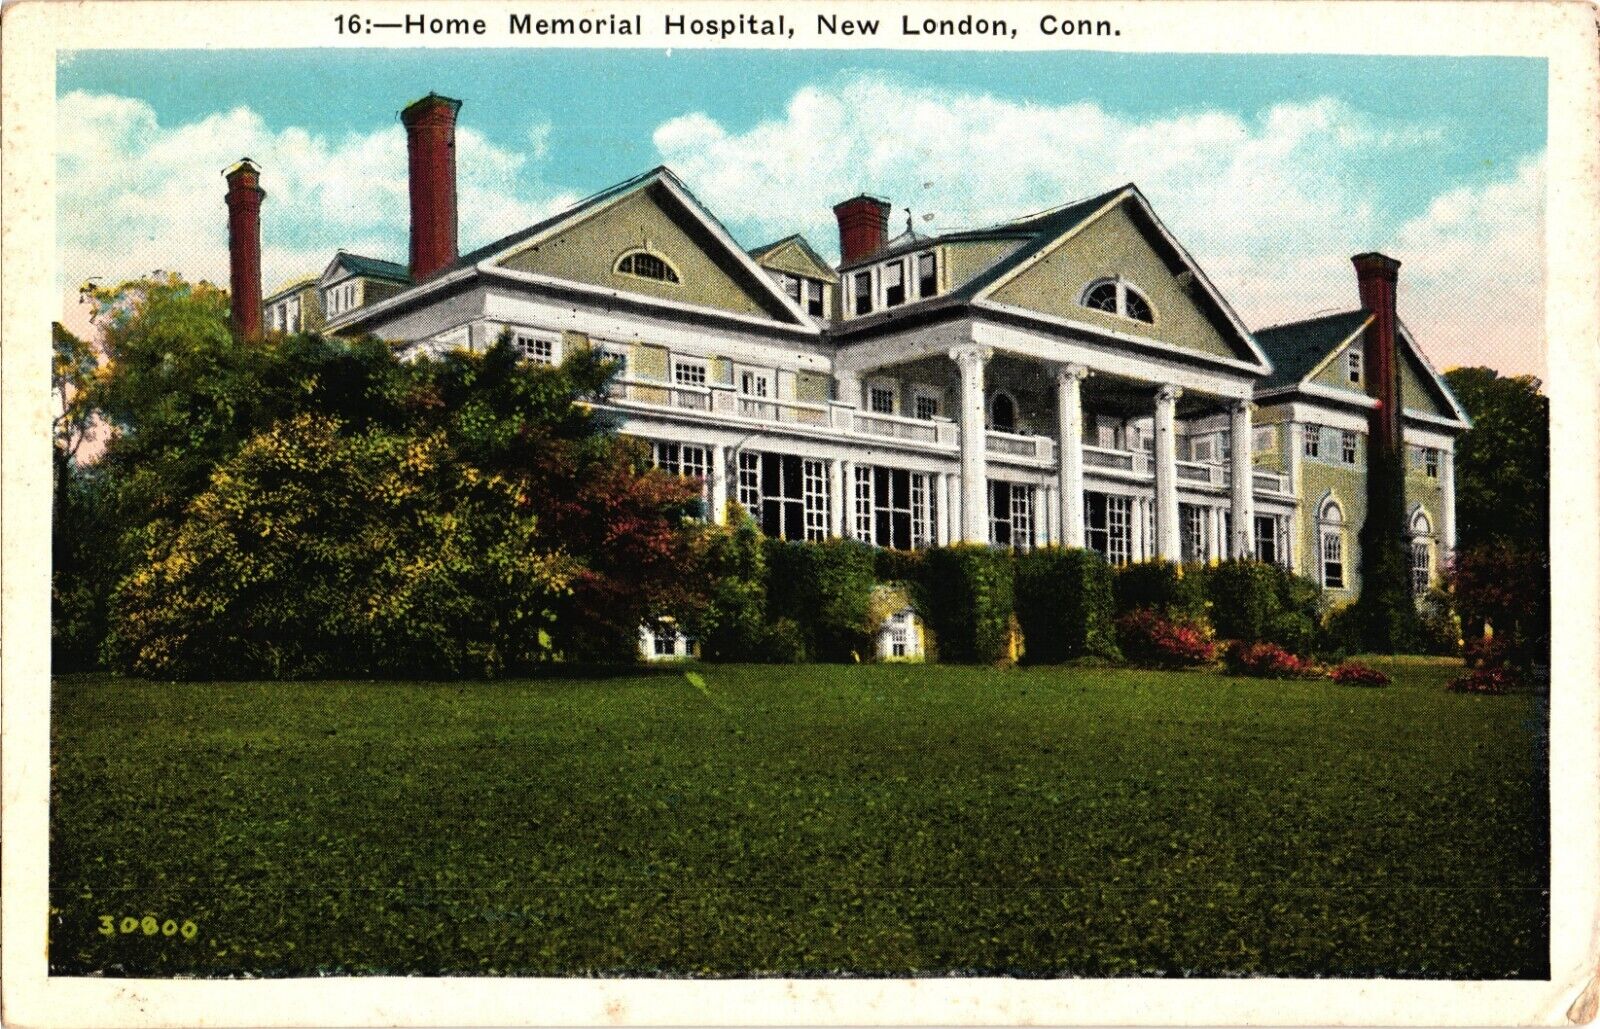 Home Memorial Hospital NEW LONDON Connecticut c1936 Postcard